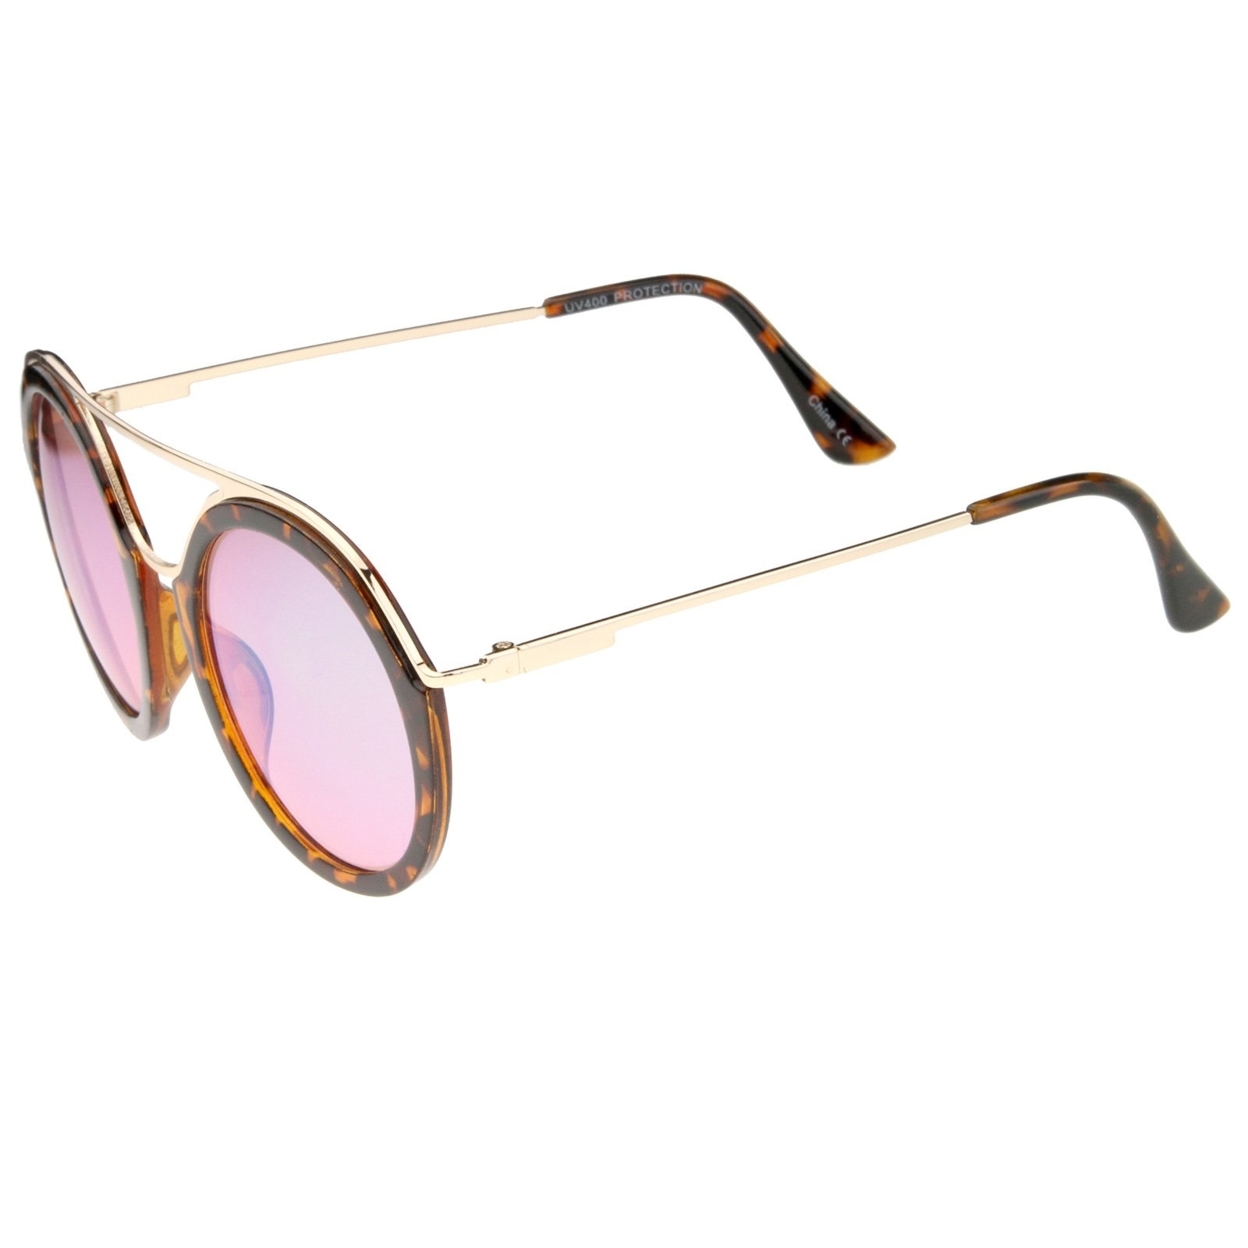 Modern Metal Double Nose Bridge Colored Mirror Lens Round Sunglasses 52mm - Tortoise-Gold / Green-Pink Mirror